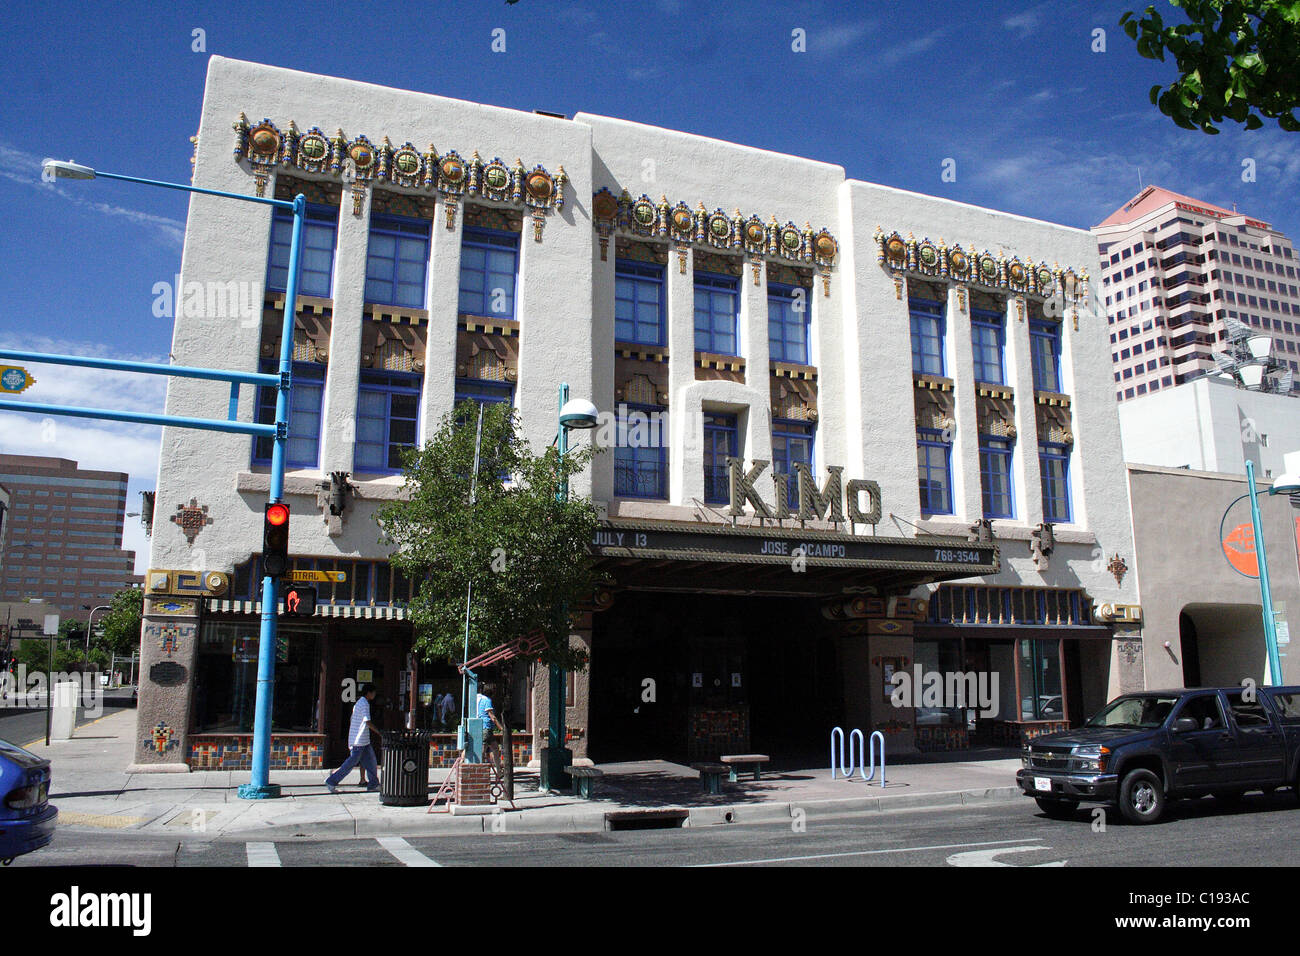 The KiMo theater in downtown Albuquerque, New Mexico, USA Stock Photo